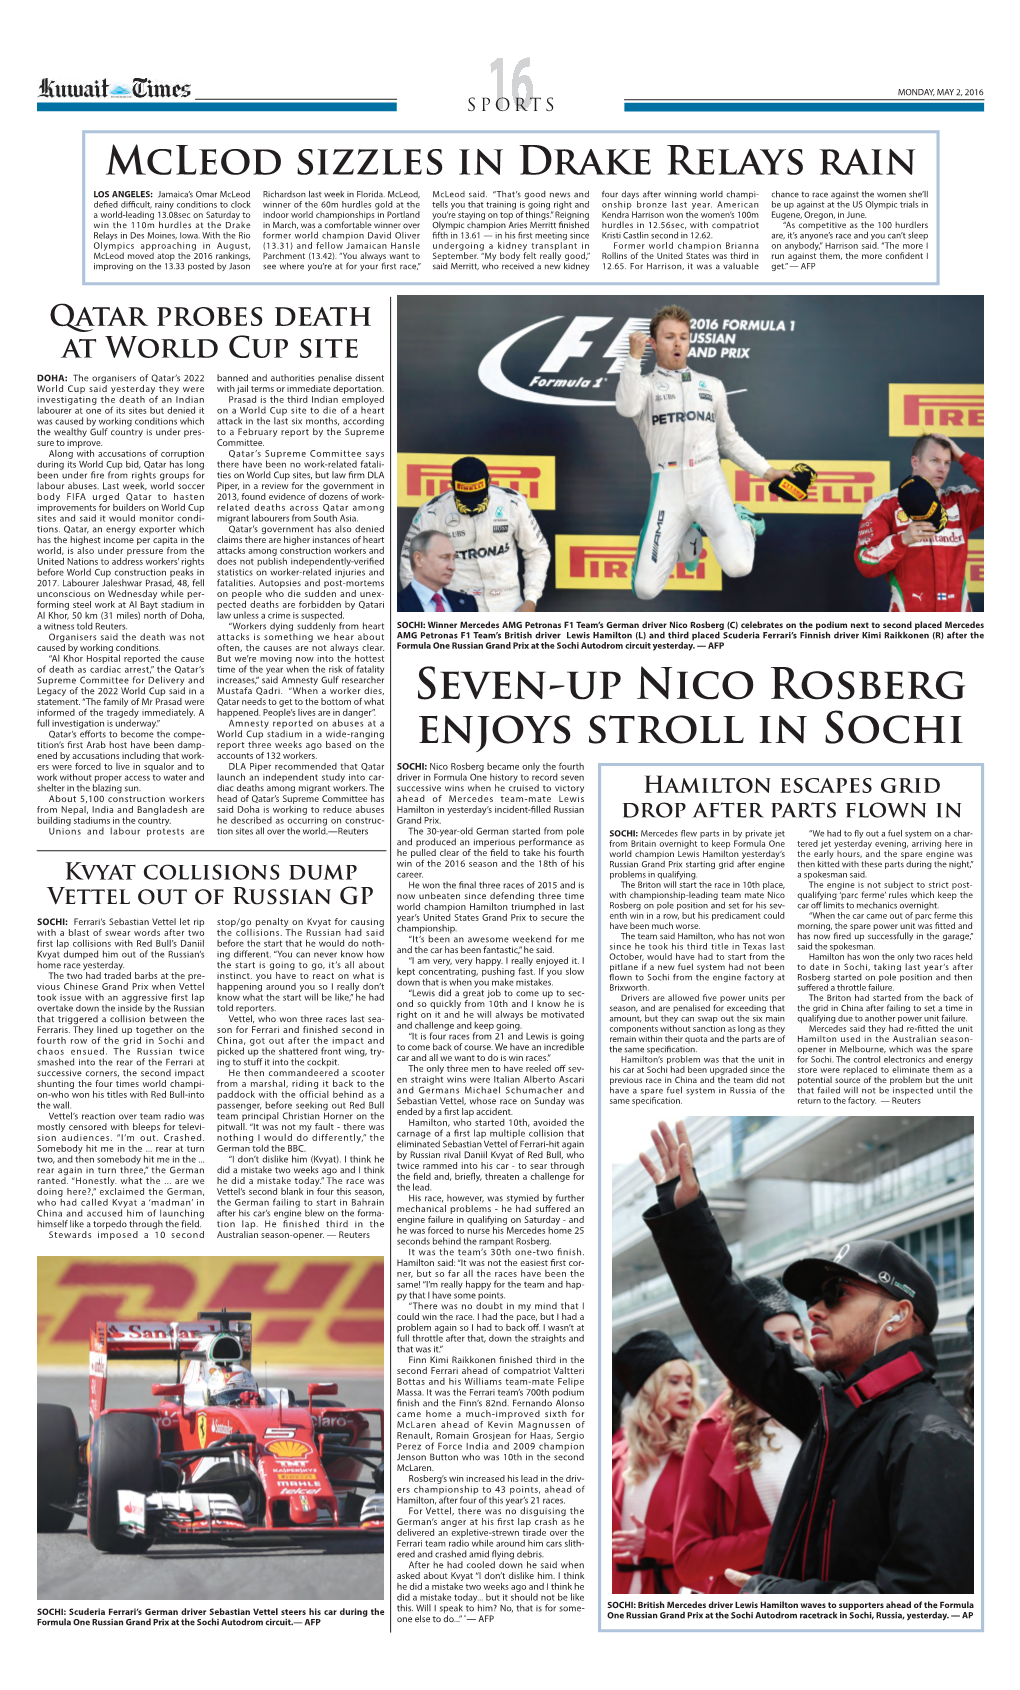 Seven-Up Nico Rosberg Enjoys Stroll in Sochi